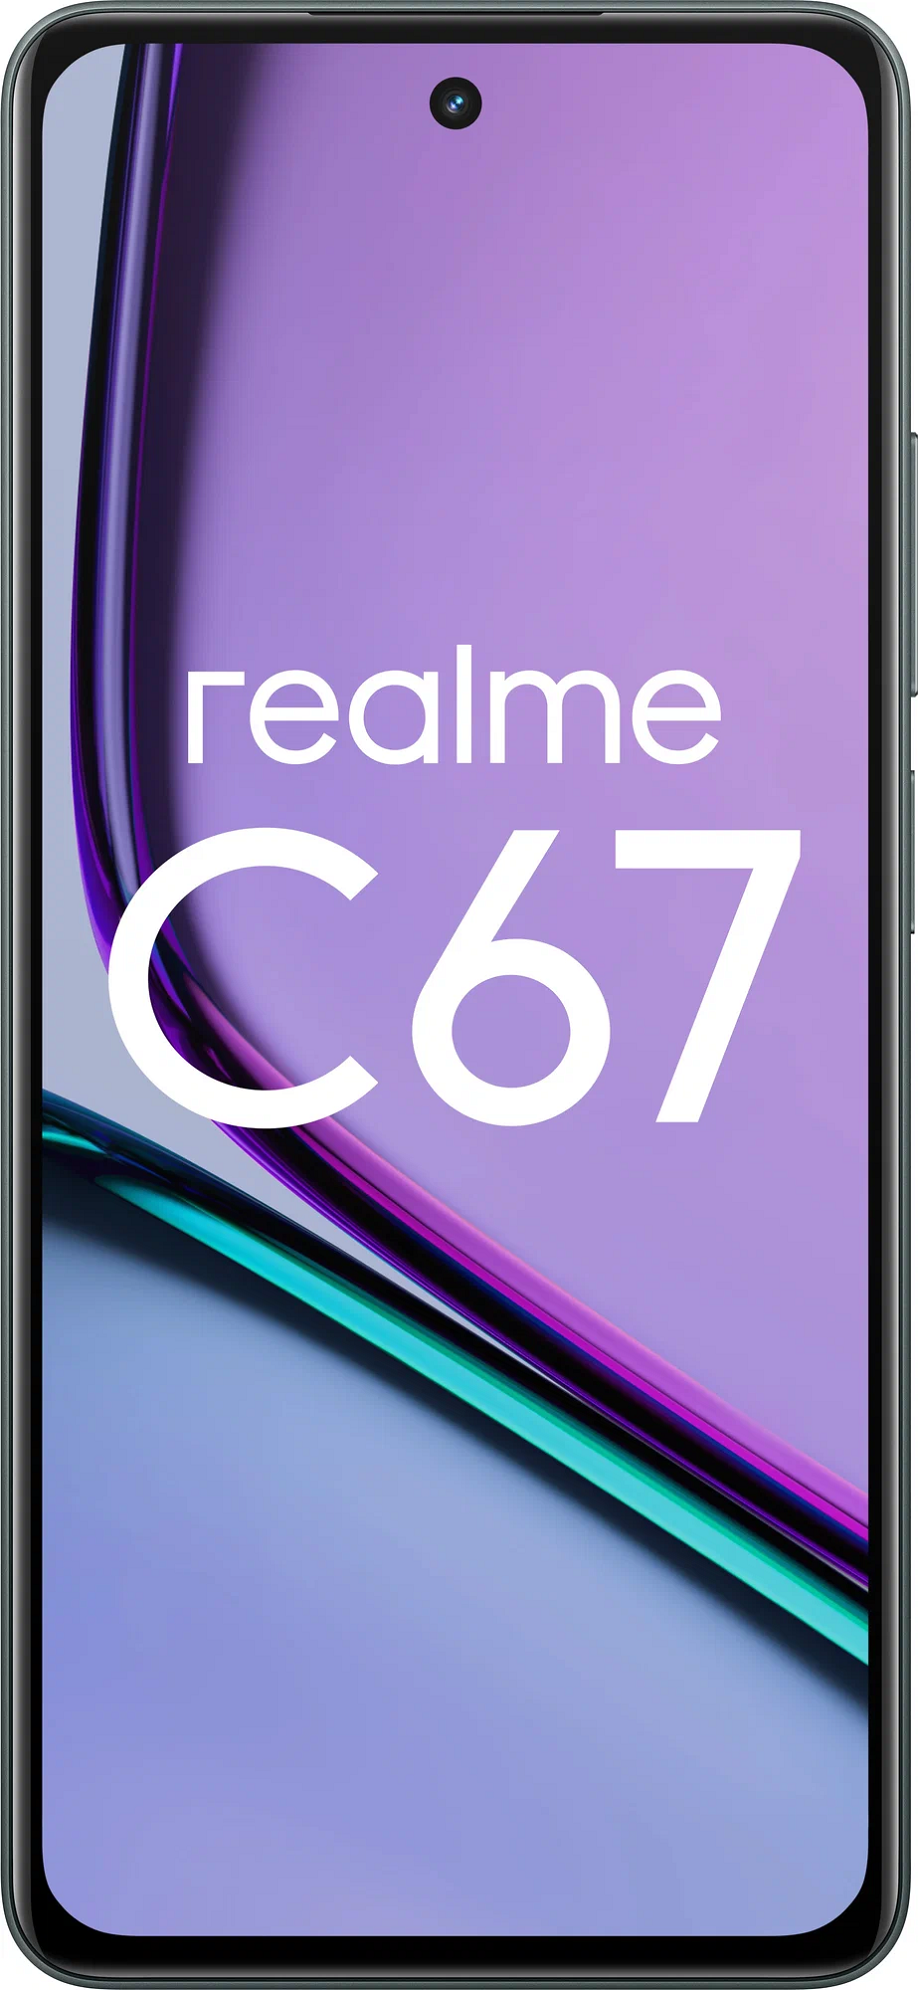 Realme C67 8/256GB